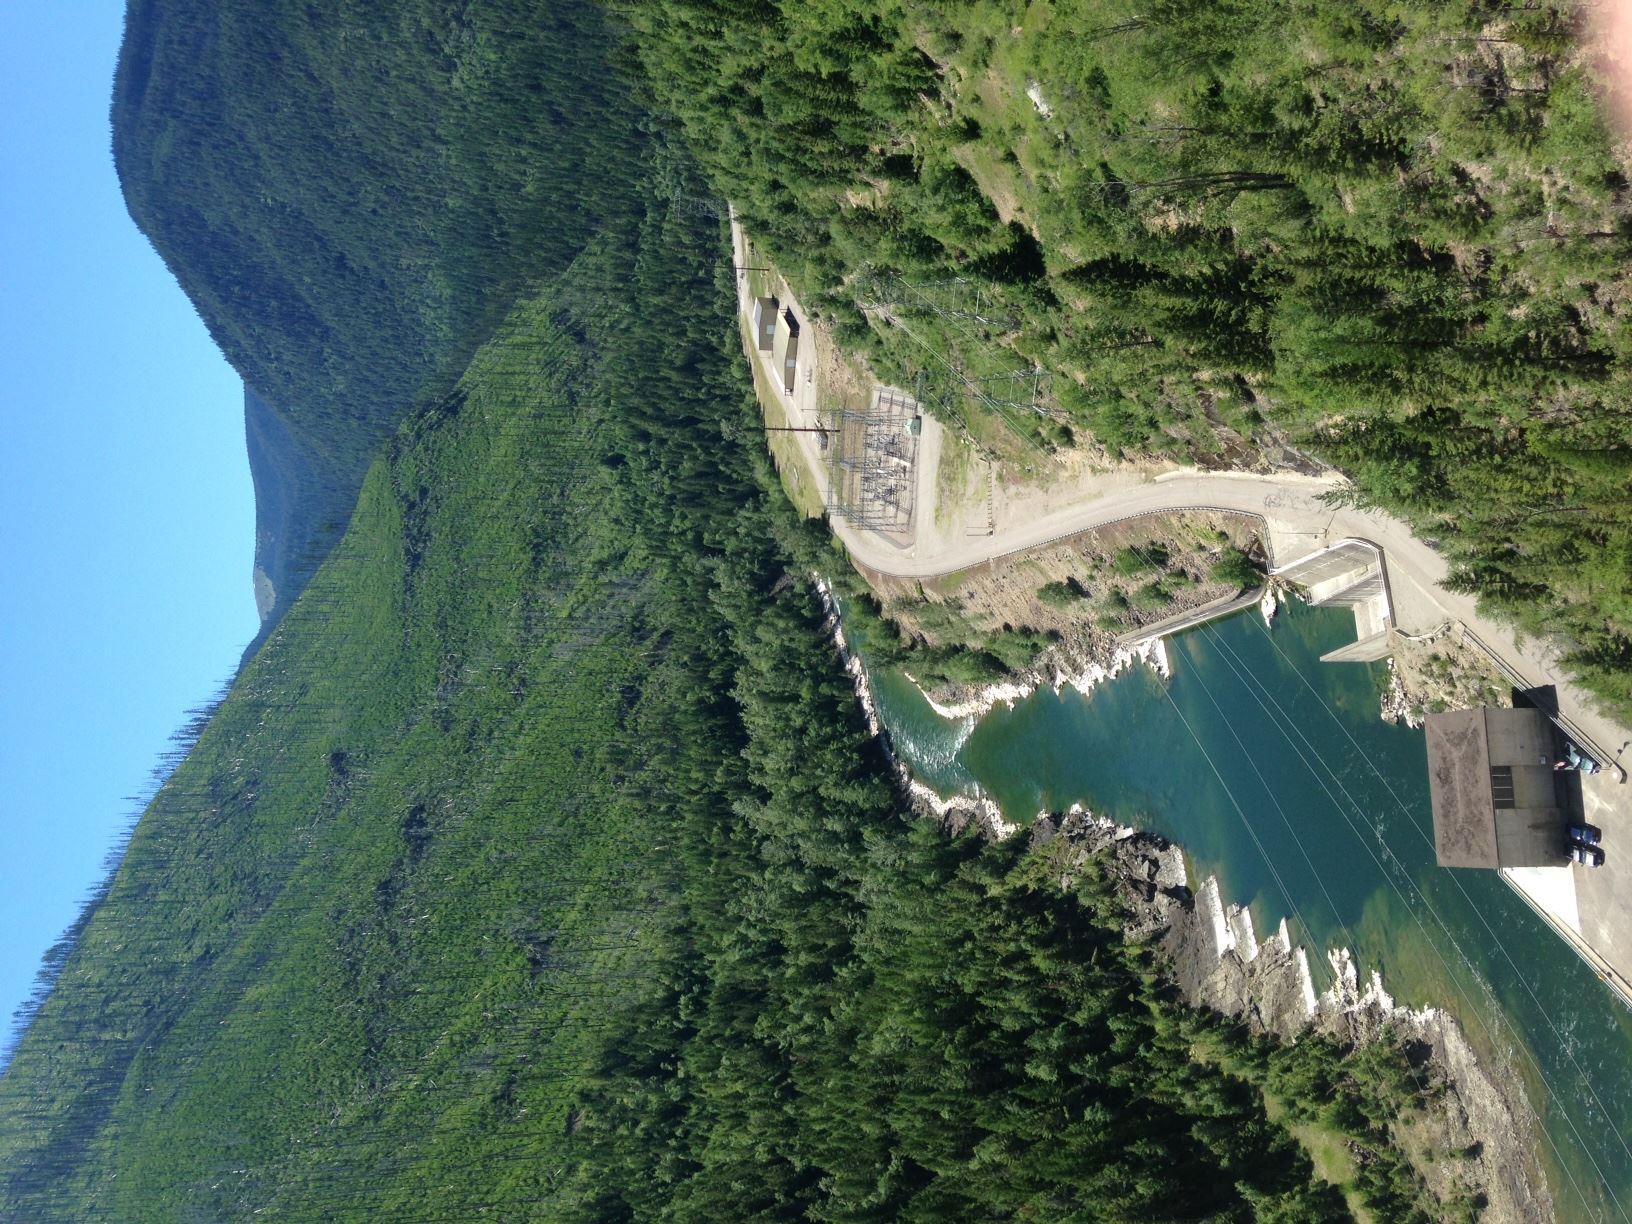 Image of Hungry Horse Reservoir, Credit VisitMT 